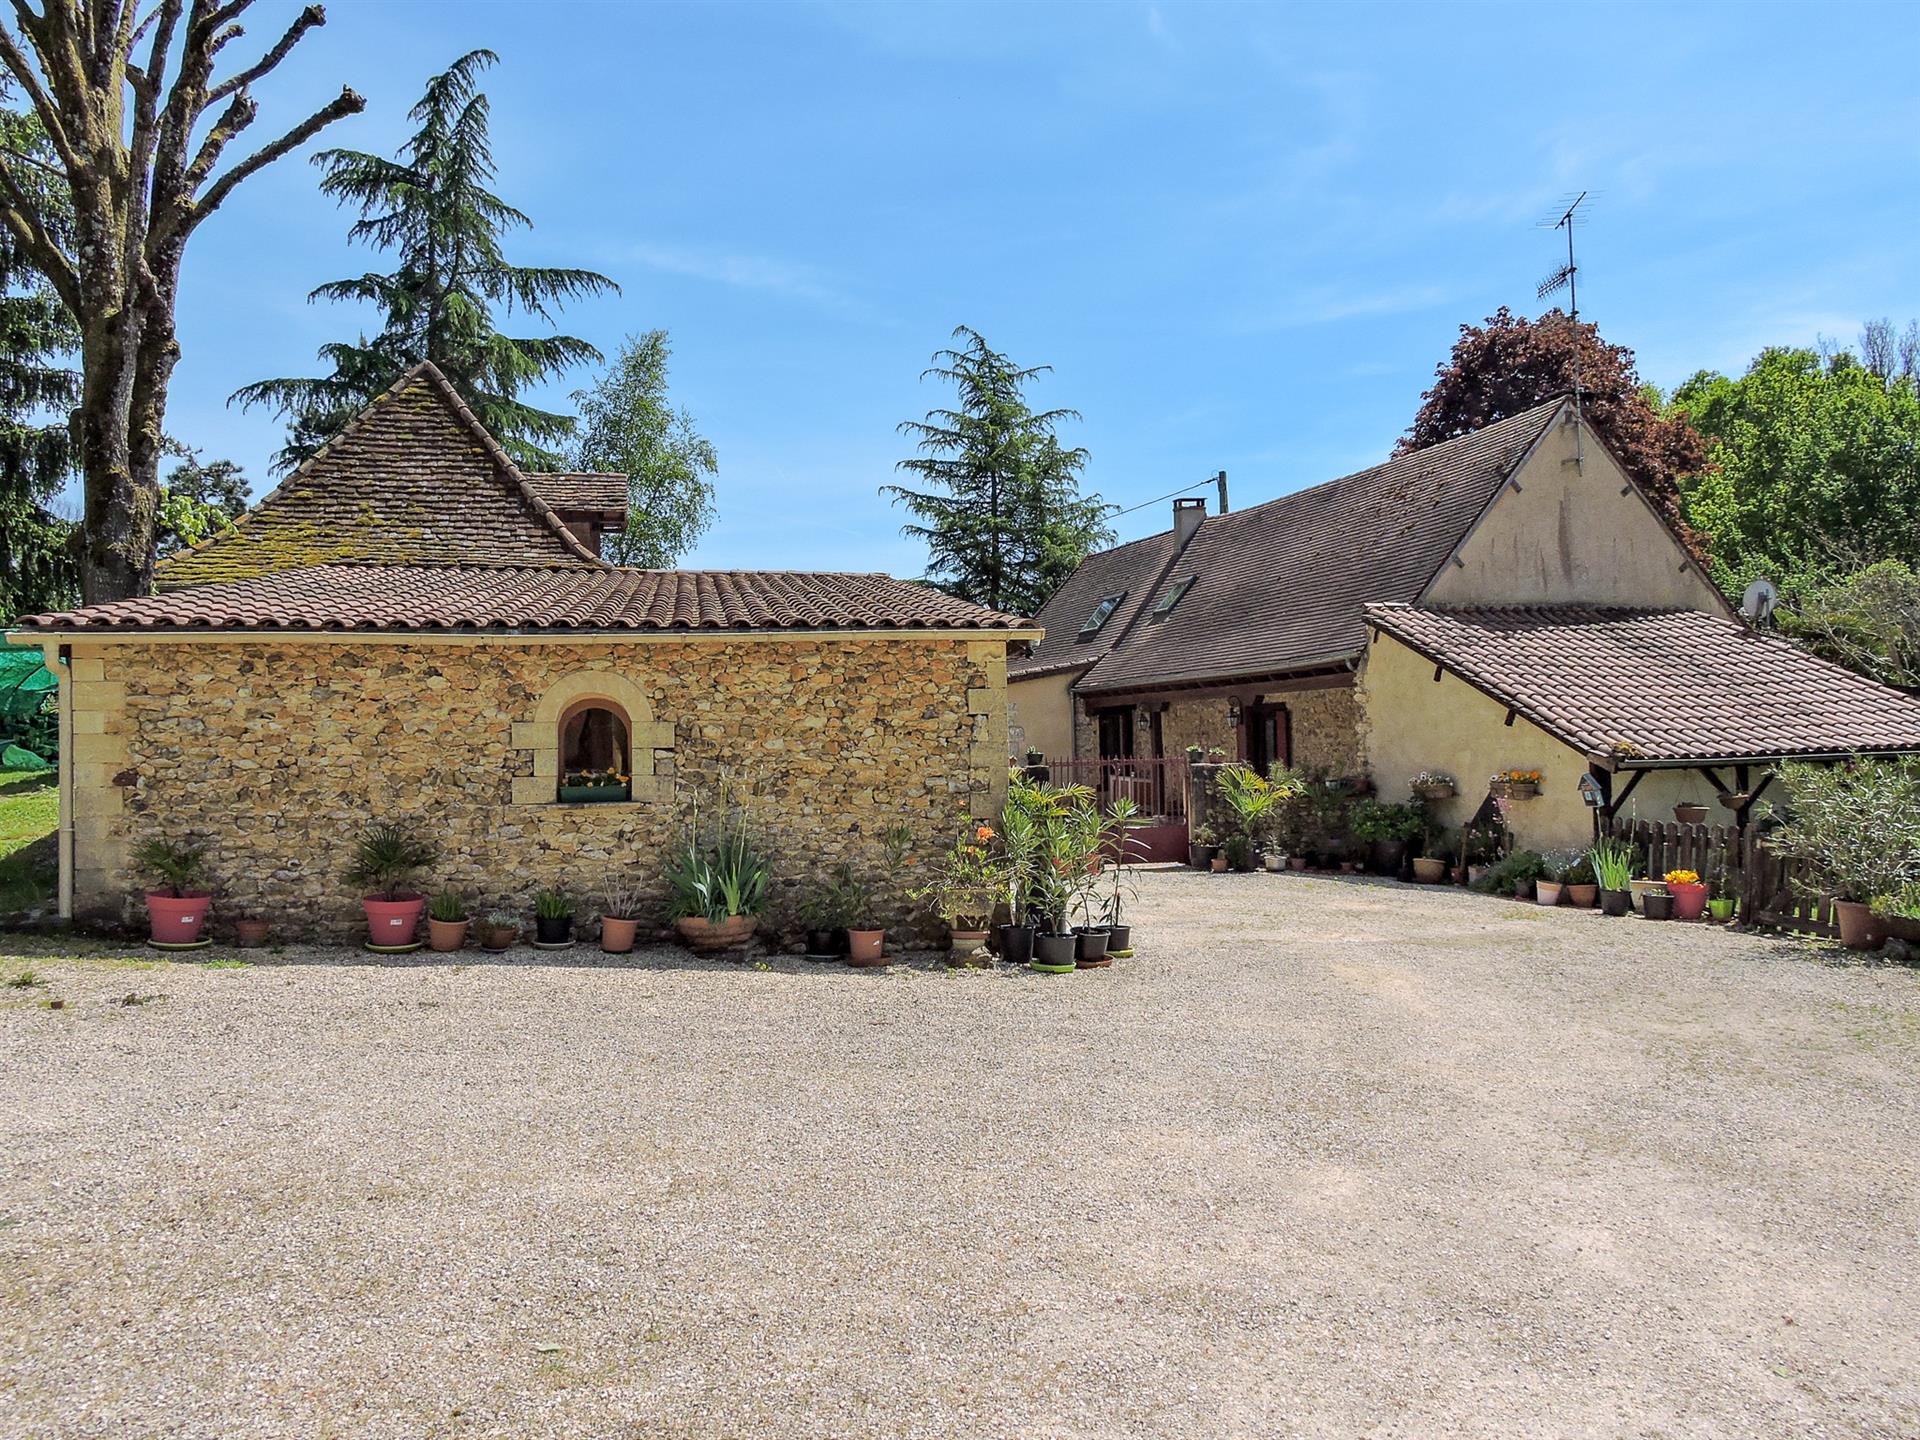 Périgord Noir - Casa in pietra con 5 camere da letto e fienile